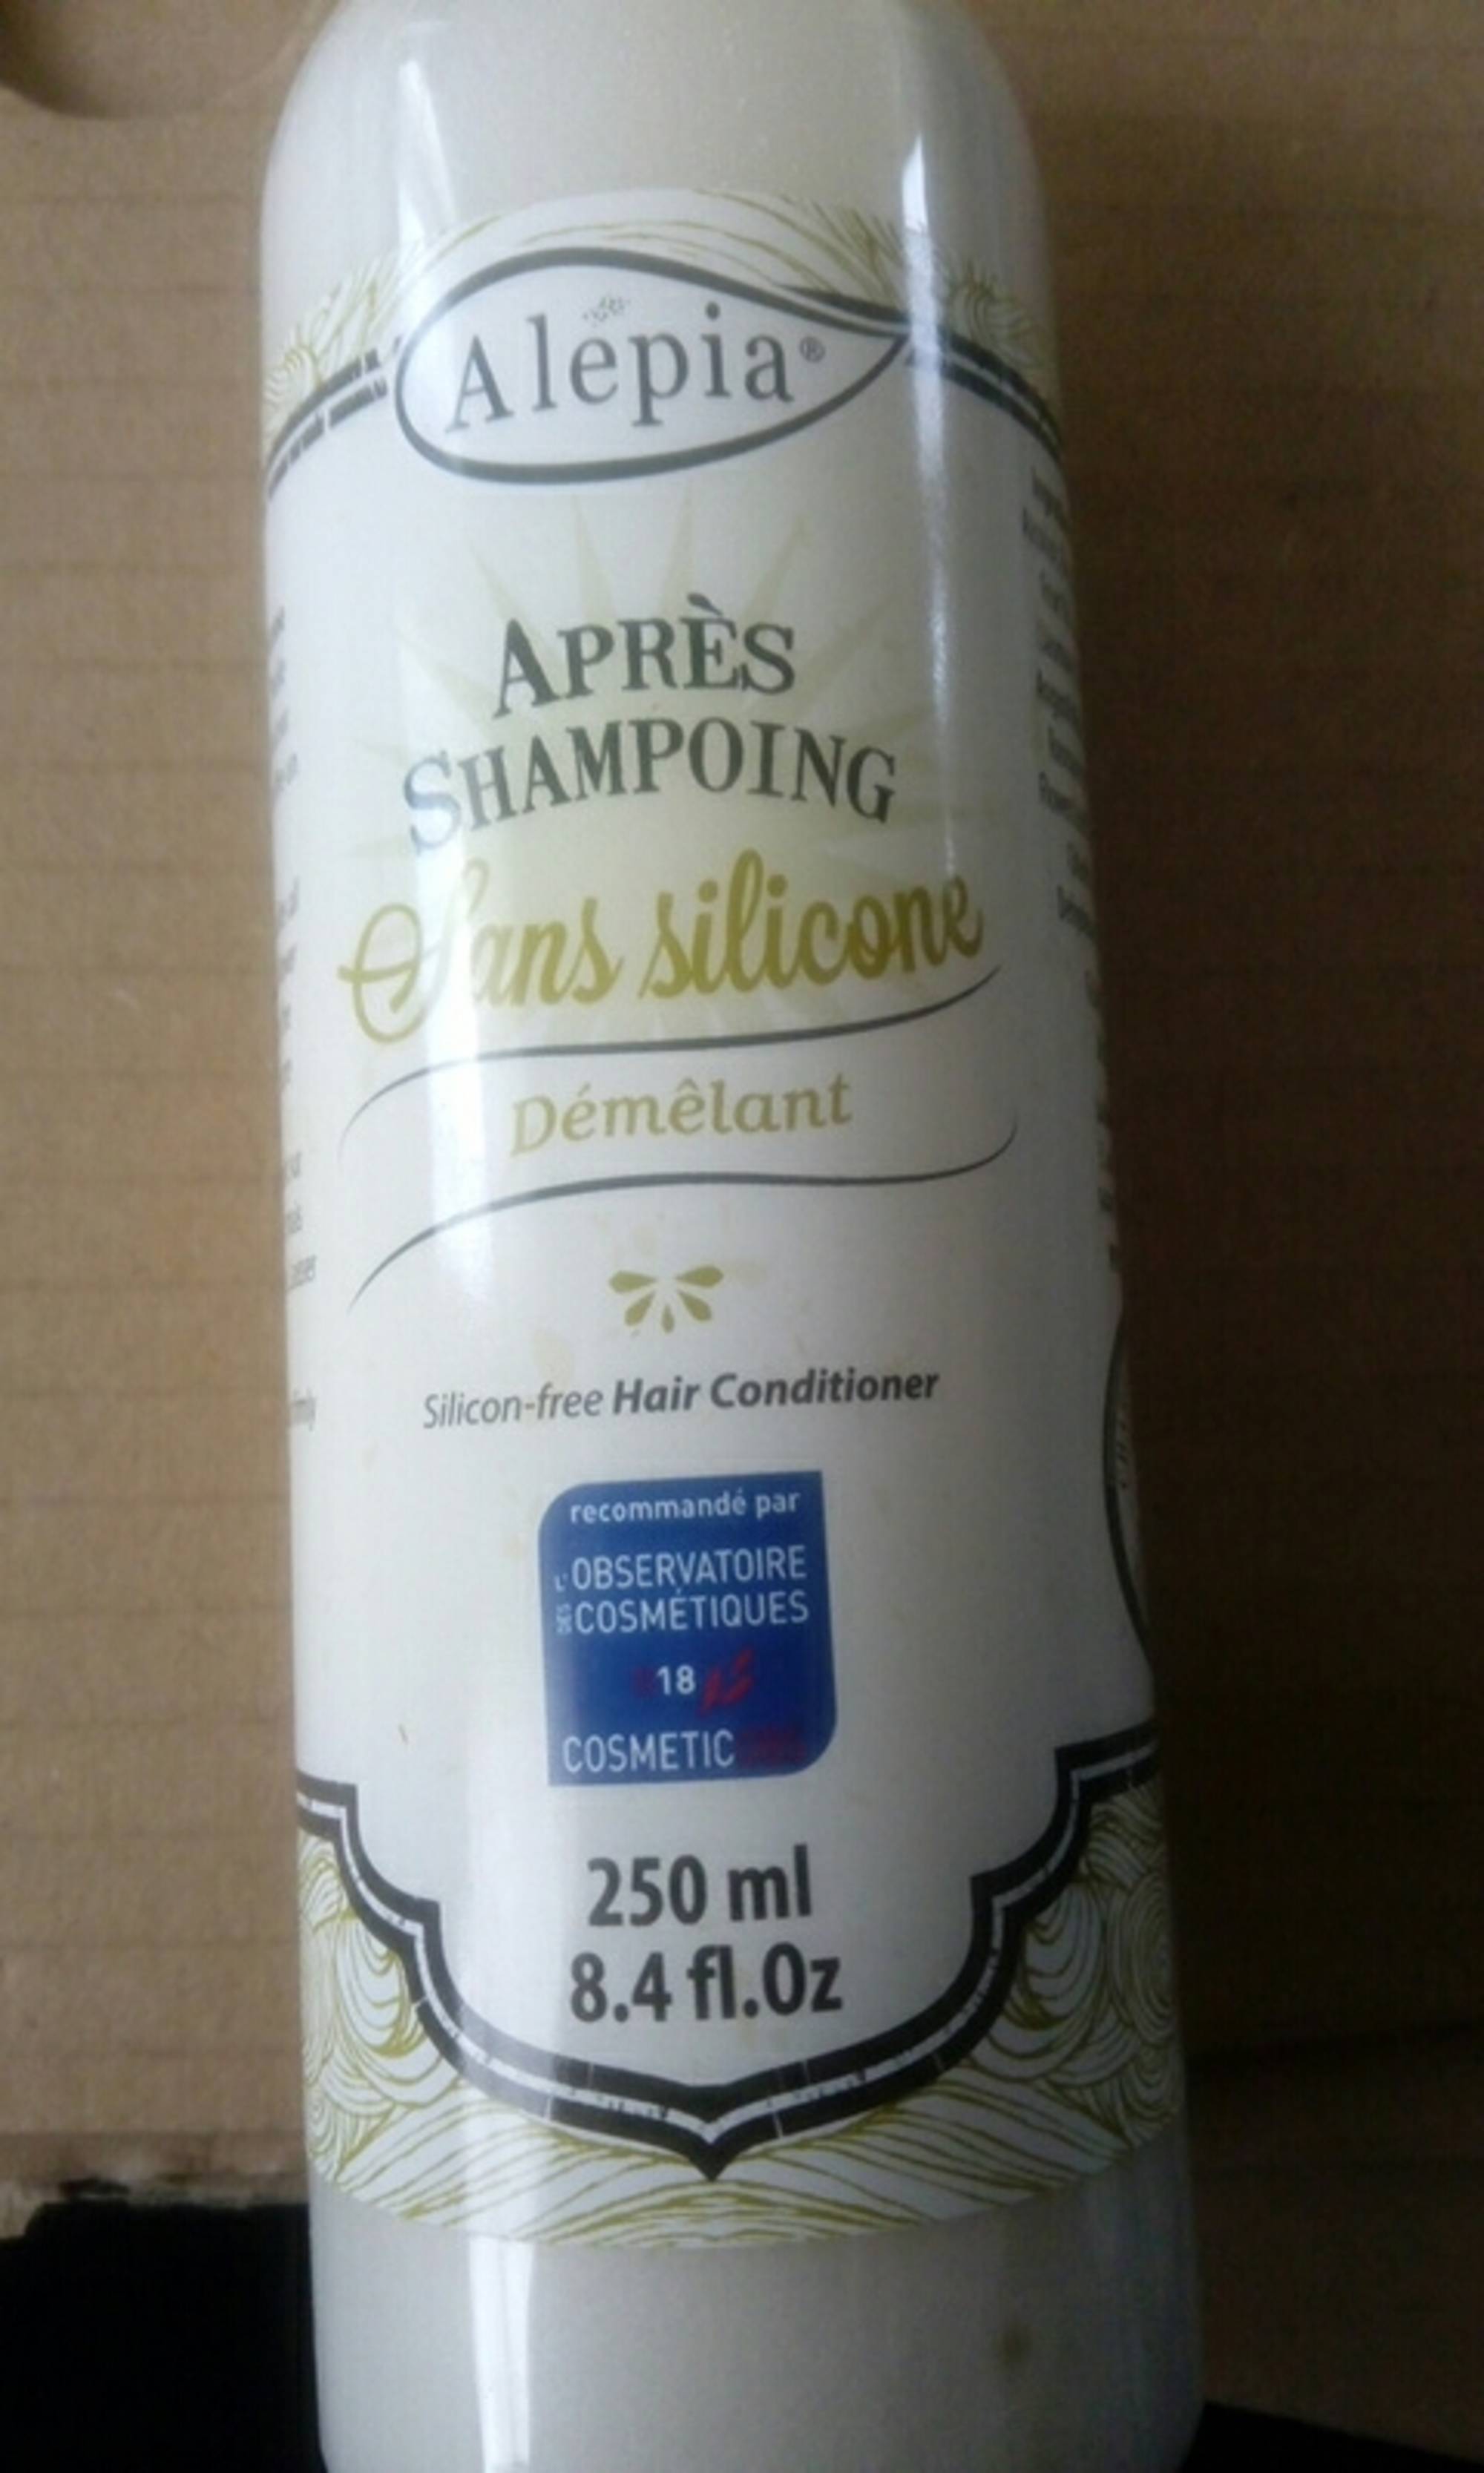 ALEPIA - Après shampooing sans silicone démêlant